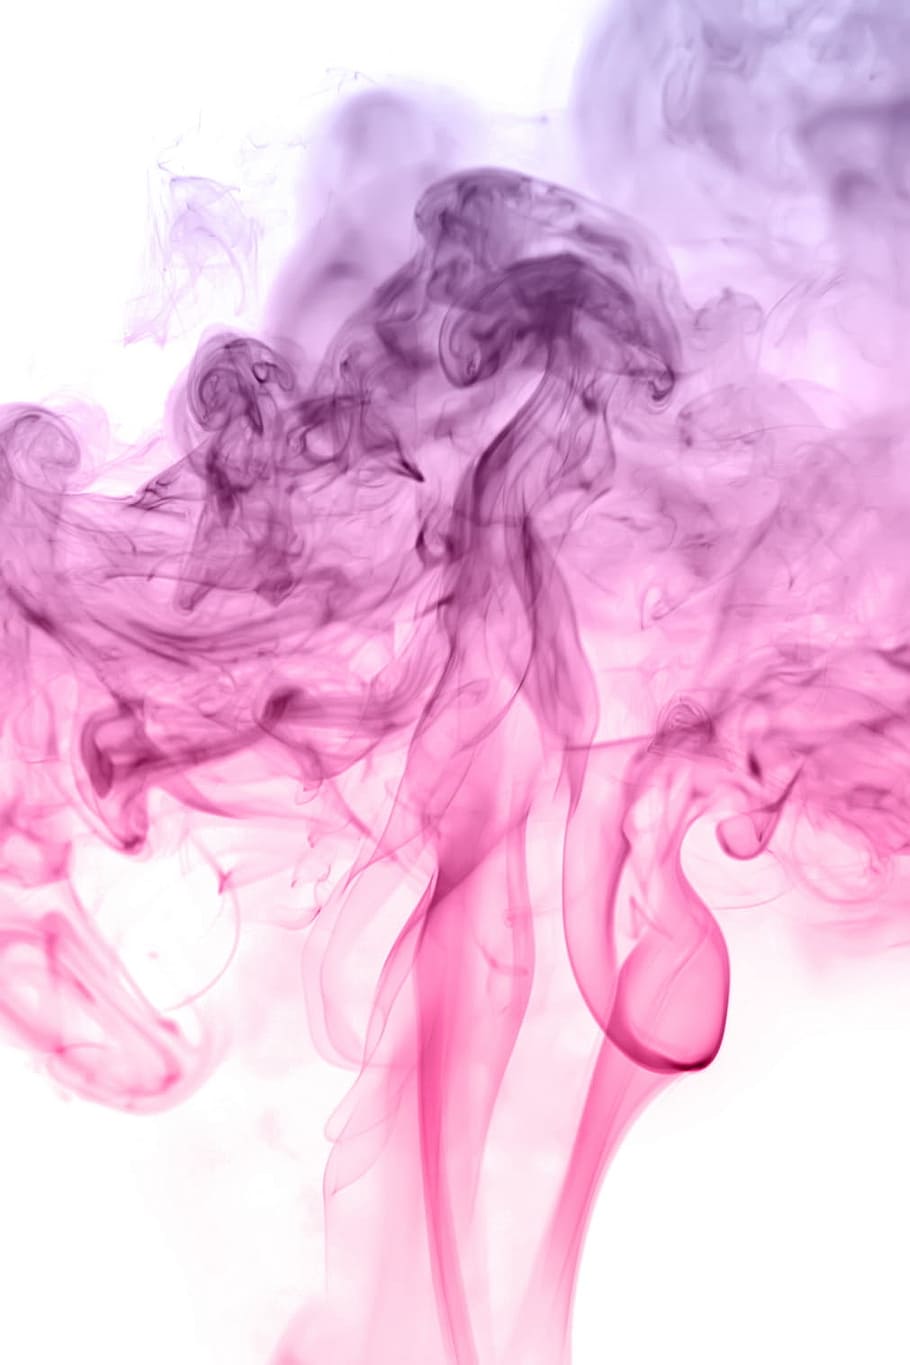 abstrak, aroma, aromaterapi, latar belakang, warna, bau, asap, gerak, asap - struktur fisik, warna pink